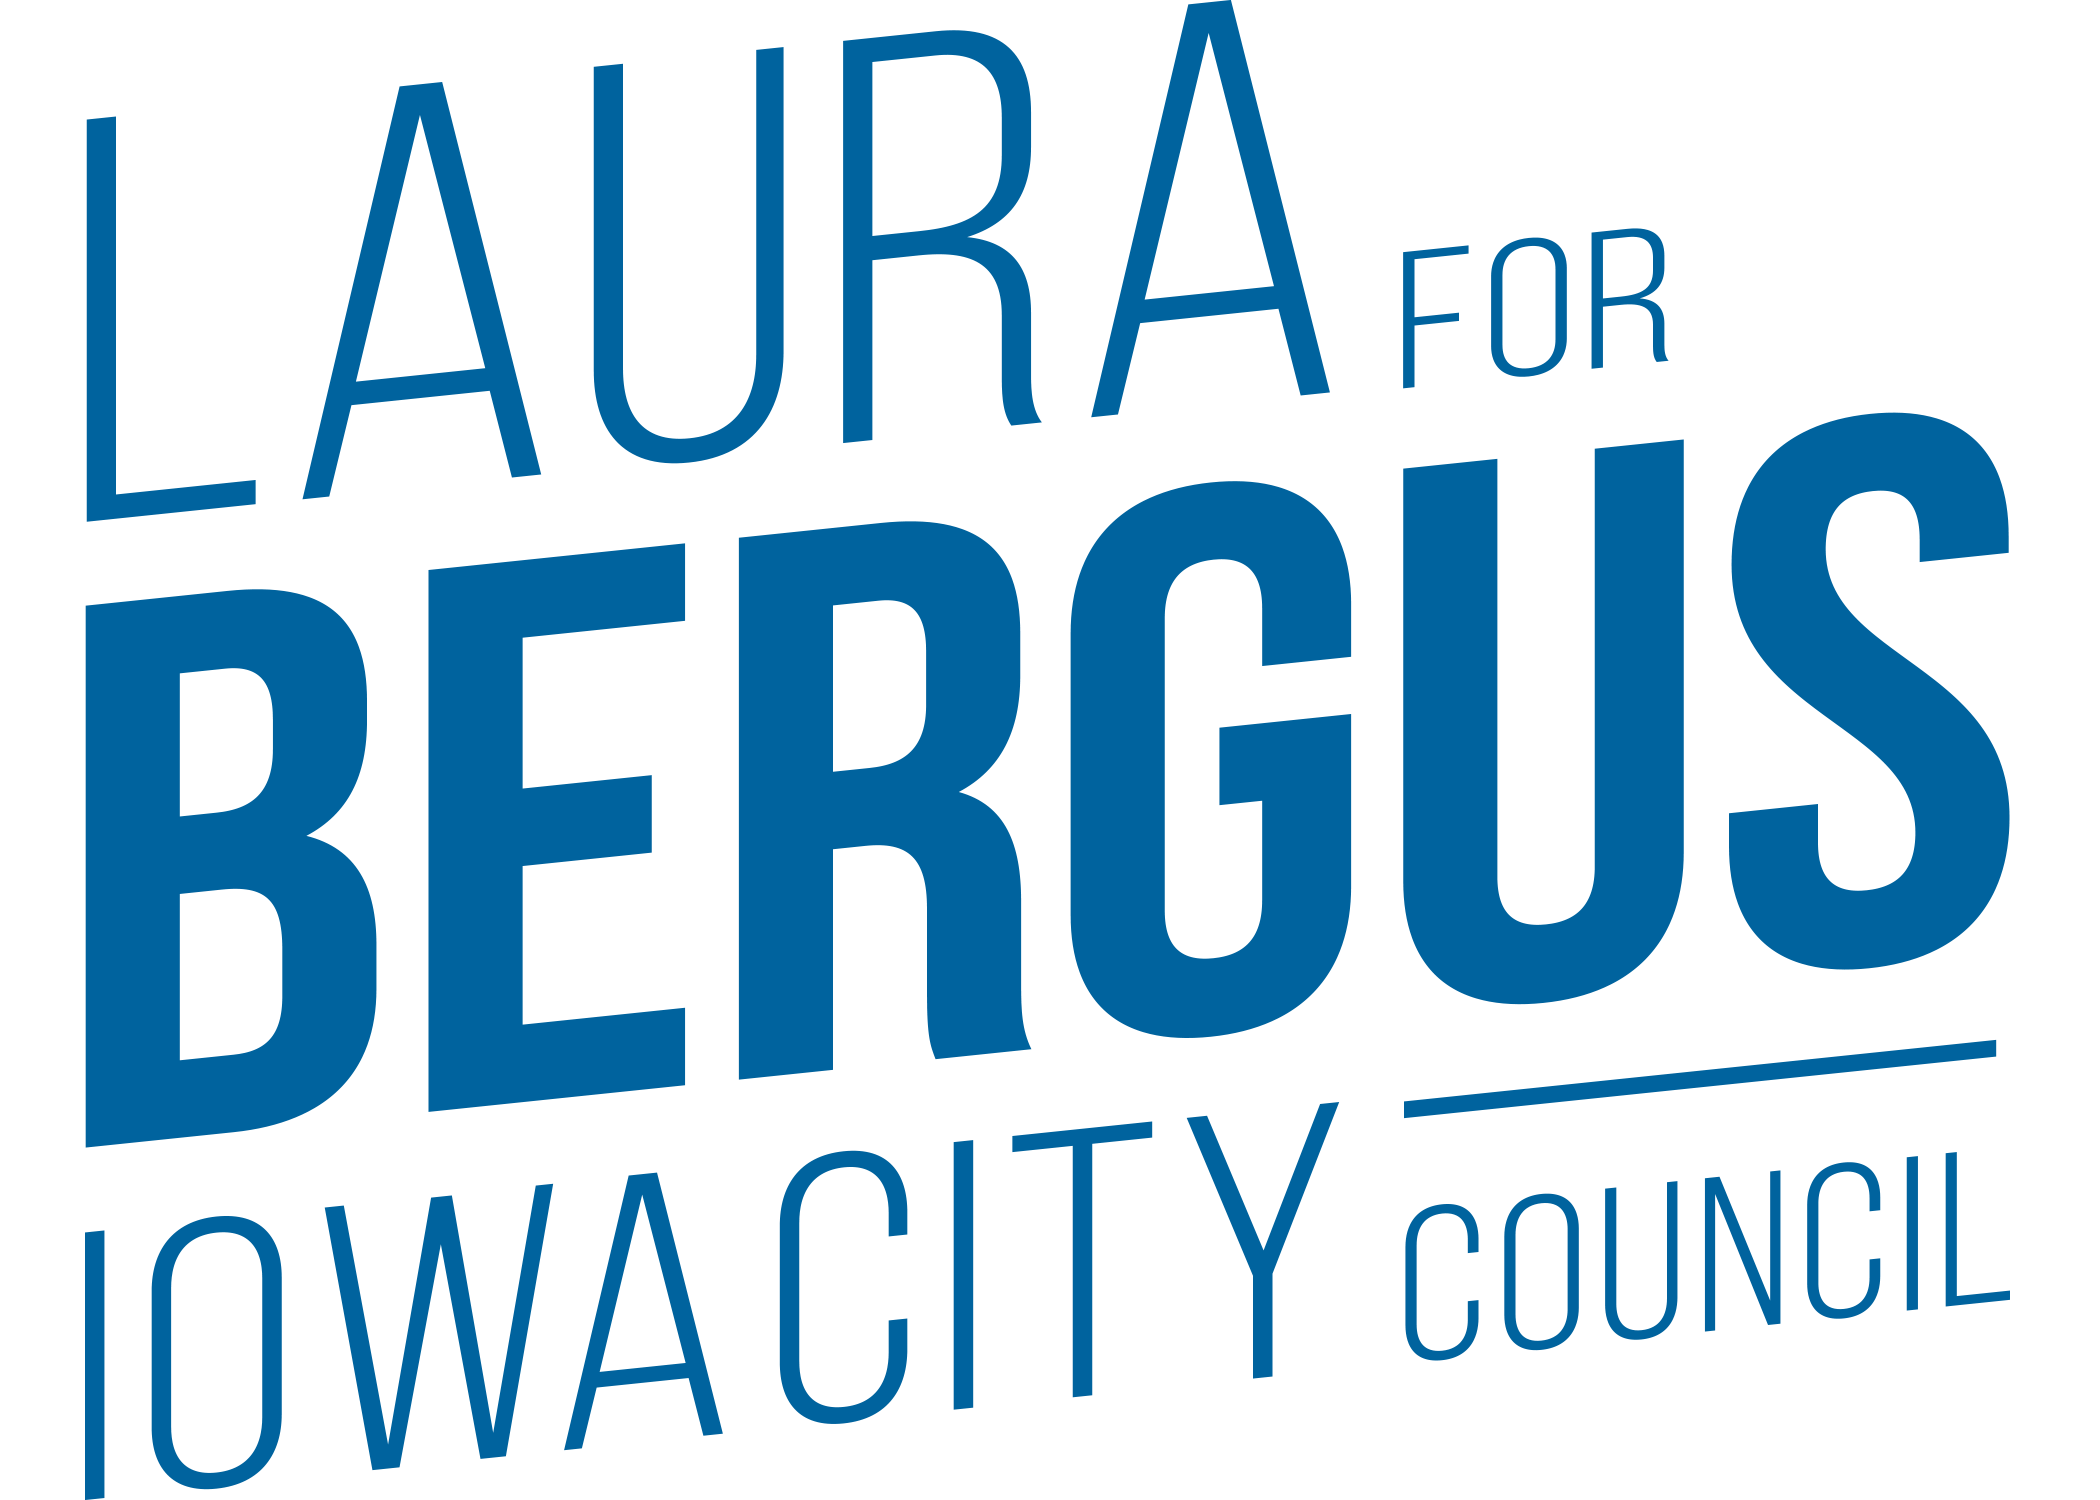 Laura Bergus, Iowa City Councilor